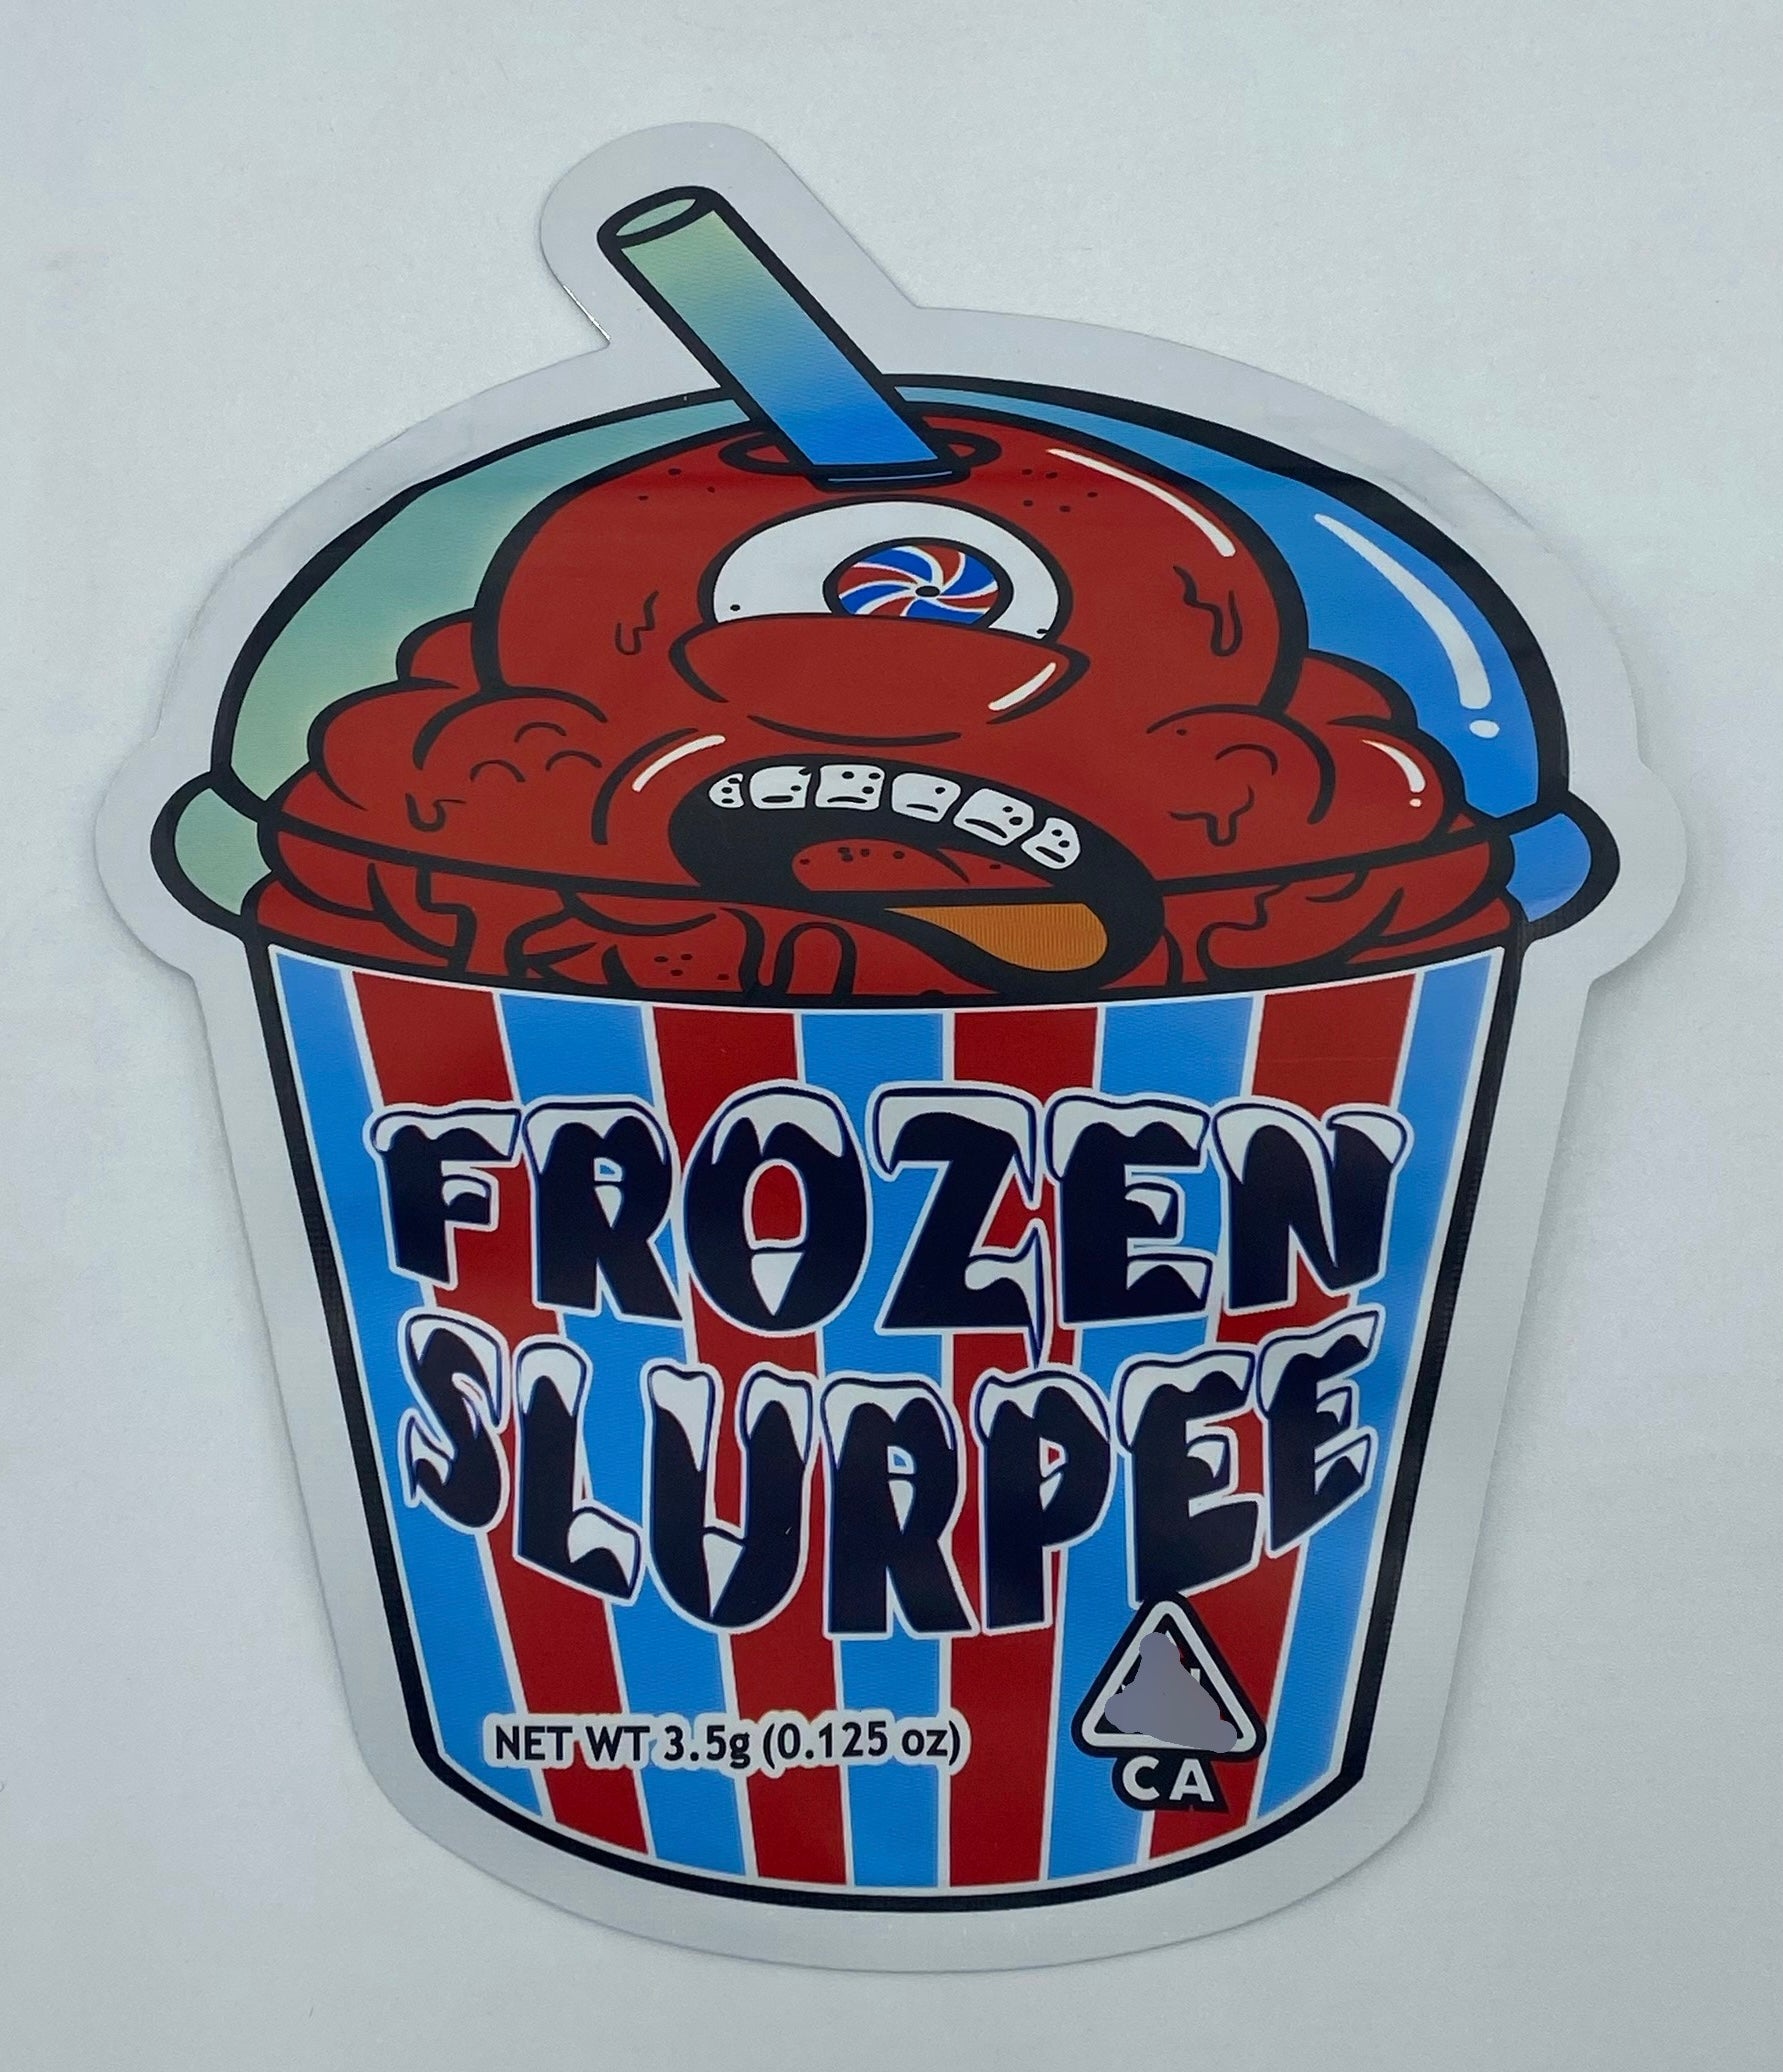 3D Frozen Slurpee 3.5g Mylar Bags